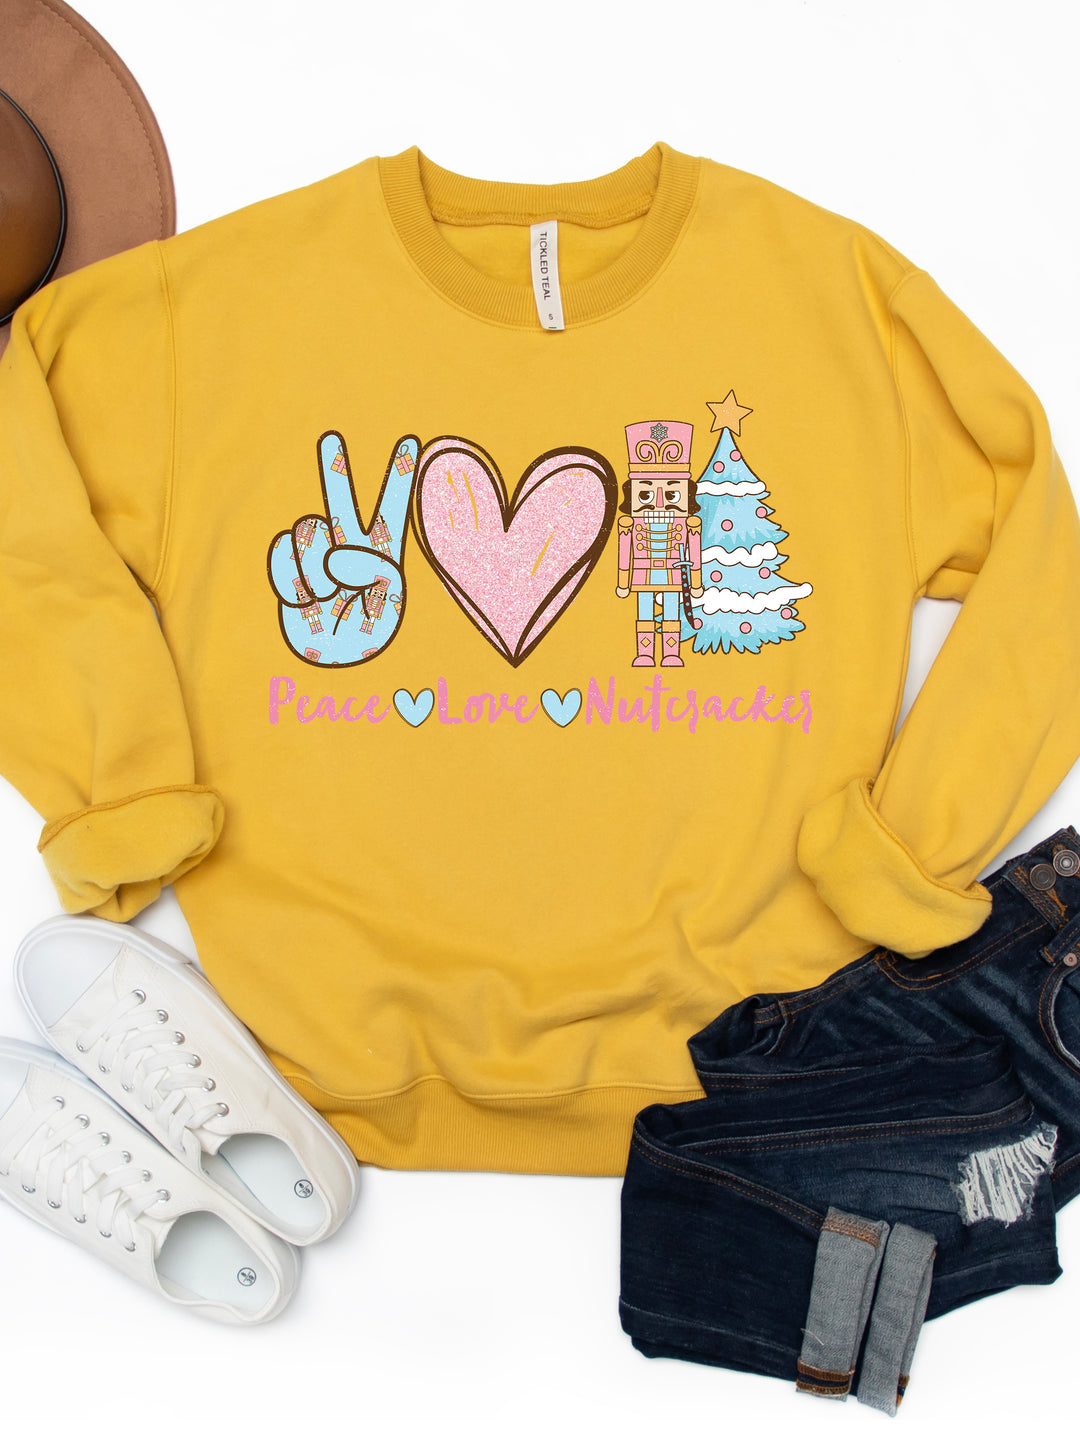 Peace, Love, Nutcracker - Graphic Sweatshirt